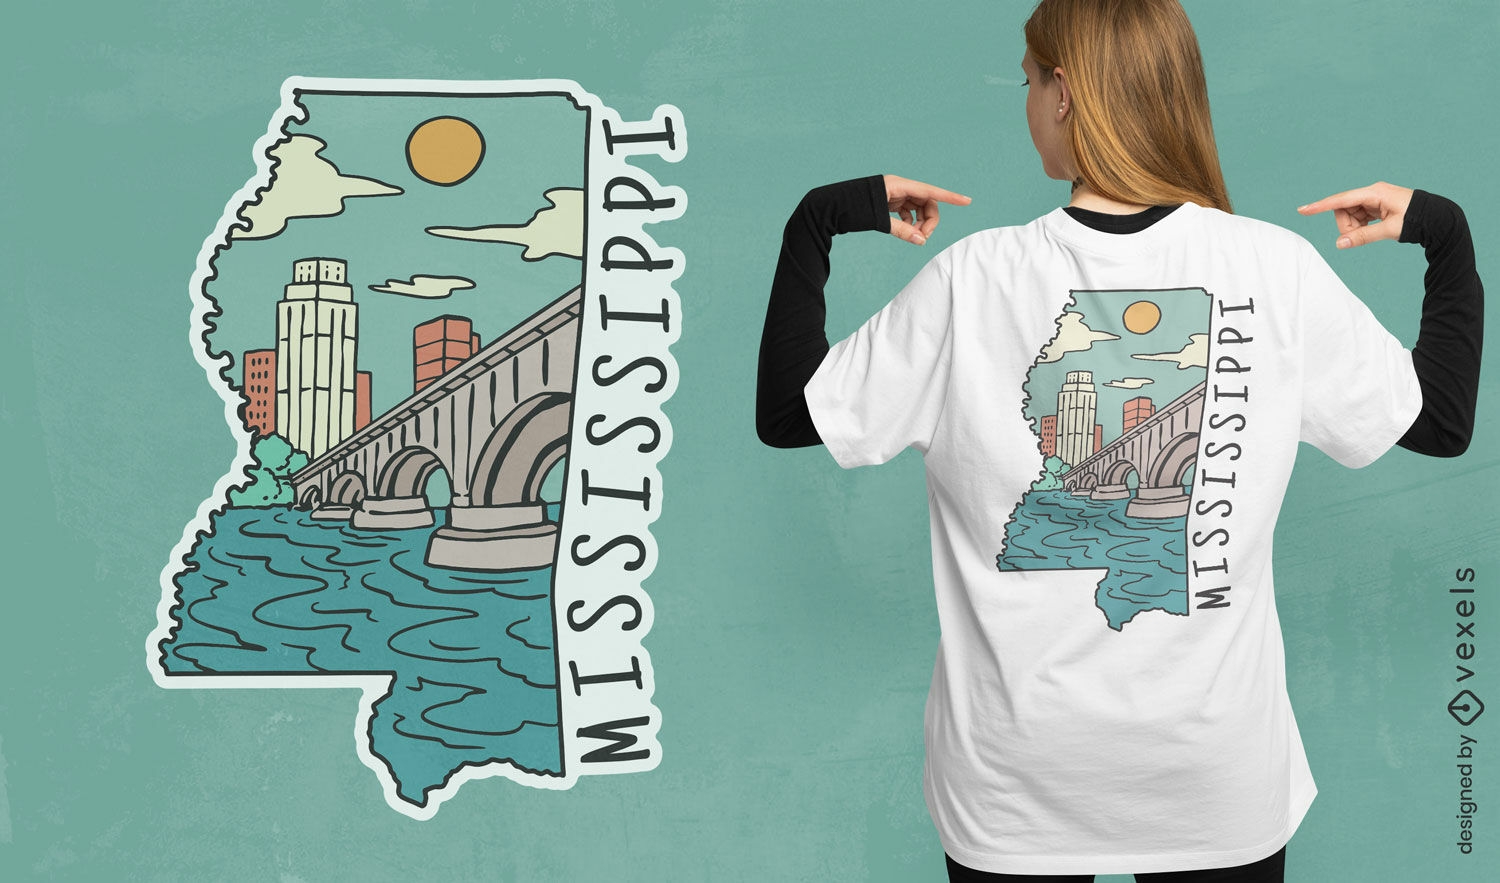 Mississippi state t-shirt design